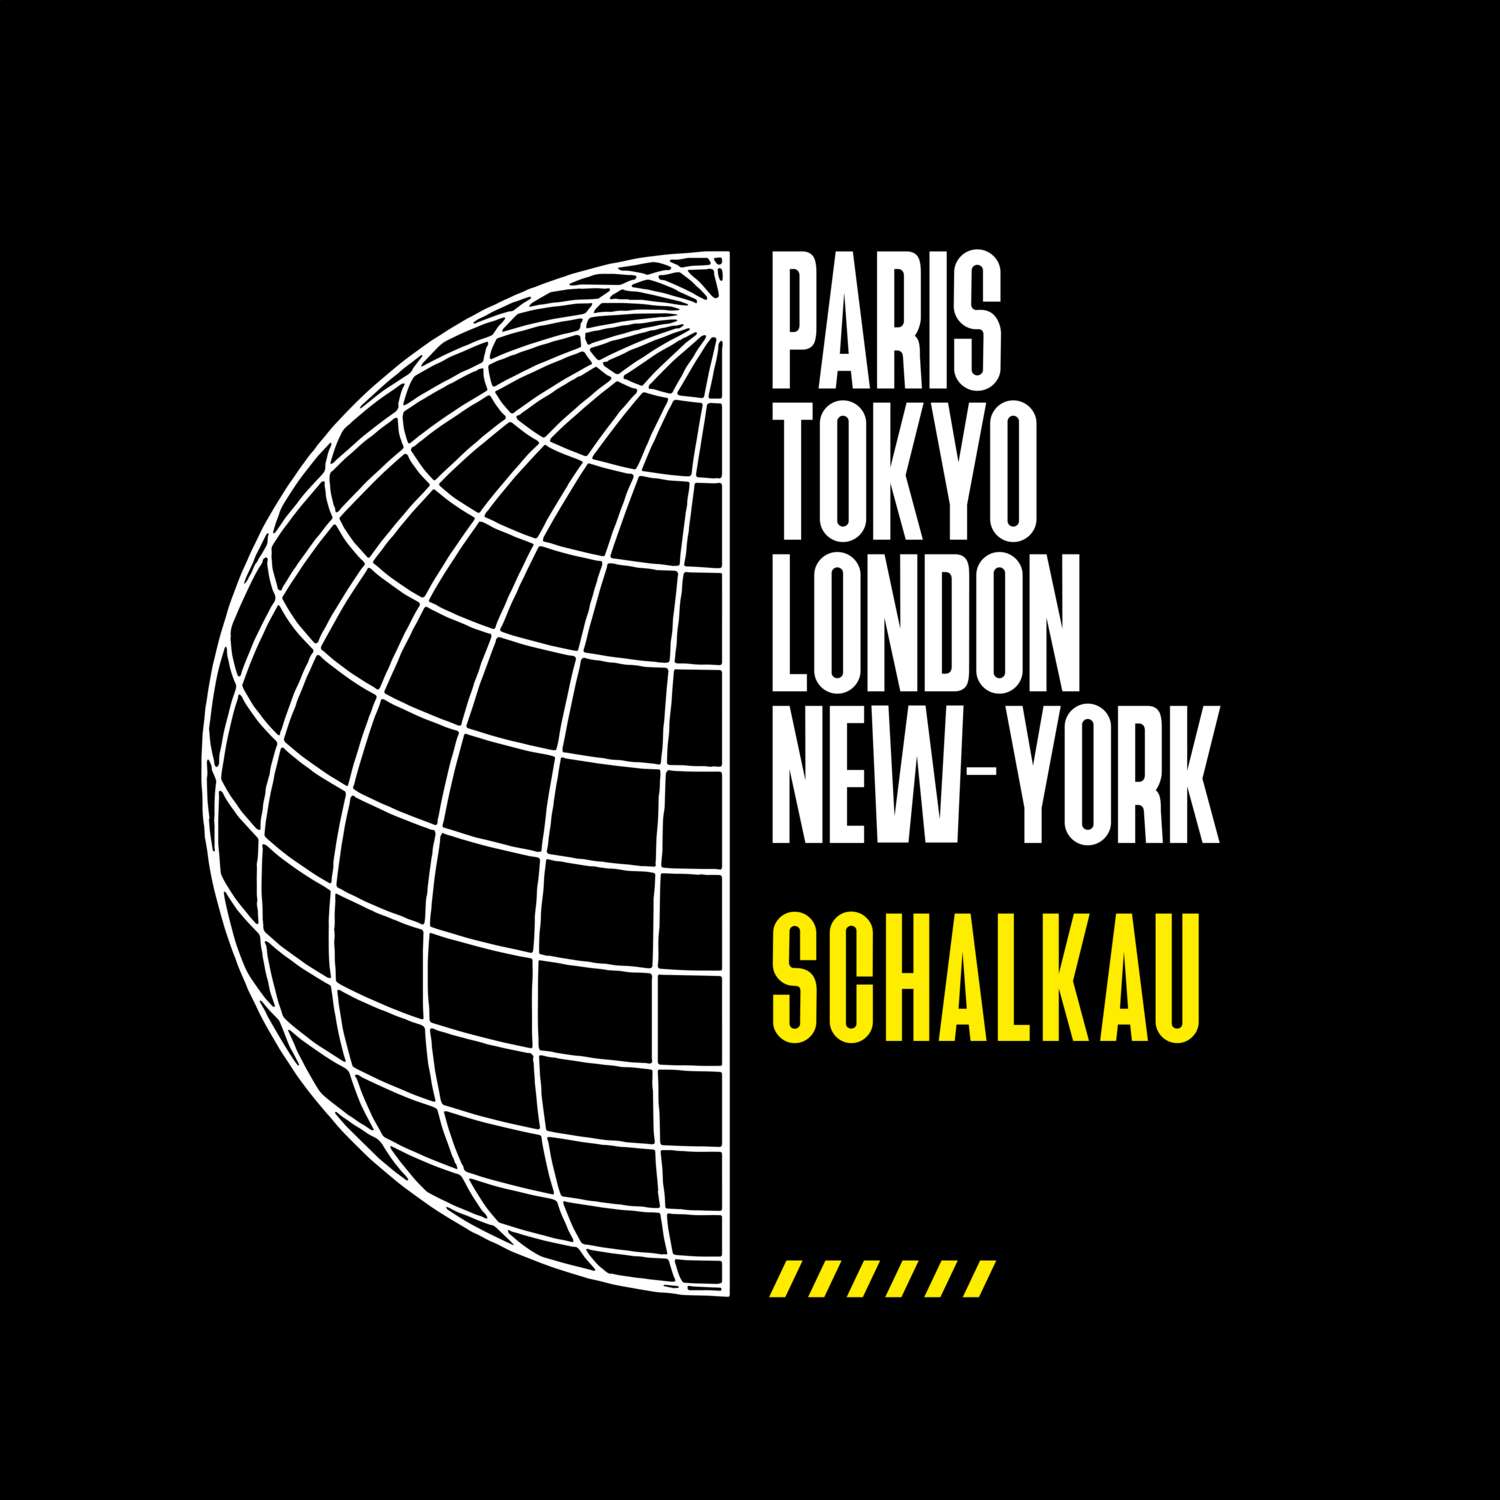 Schalkau T-Shirt »Paris Tokyo London«